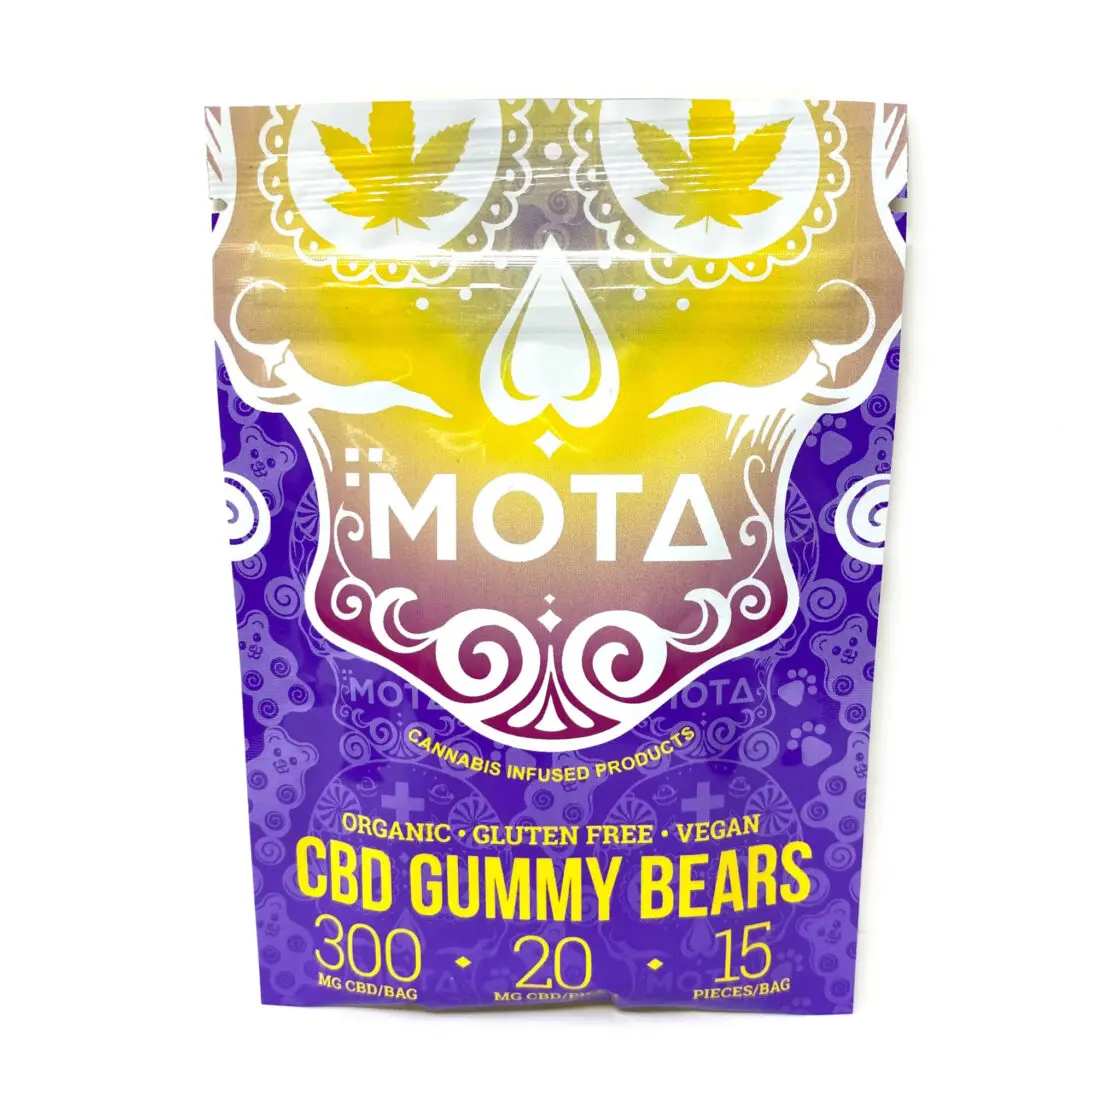 Mota Cbd Vegan Gluten Free Organic Gummy Bears